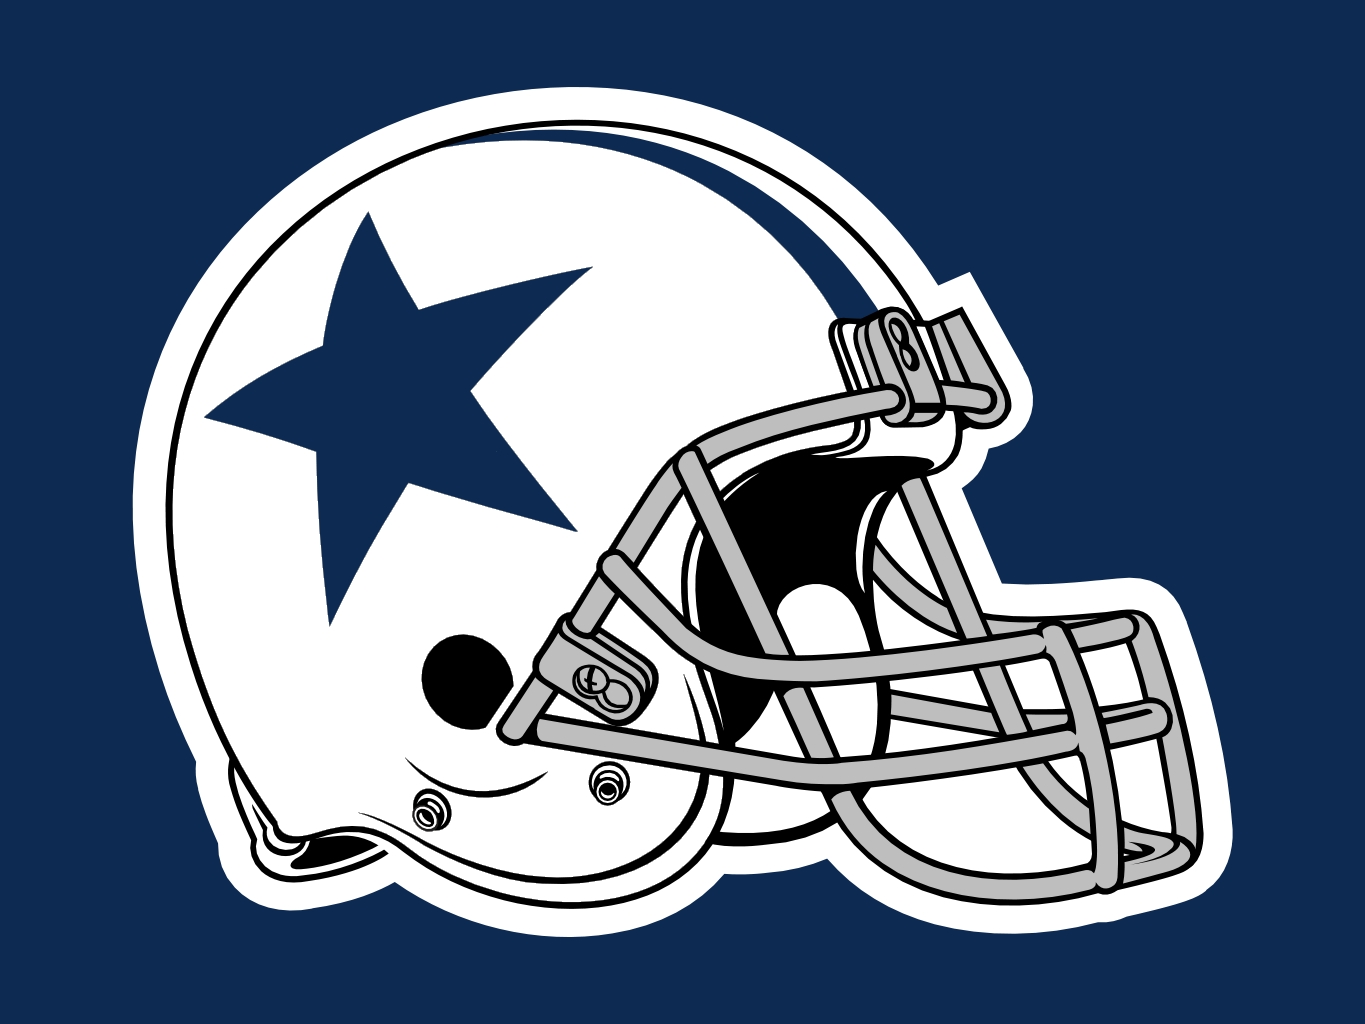 Cowboys Helmet Logo drawing free image download